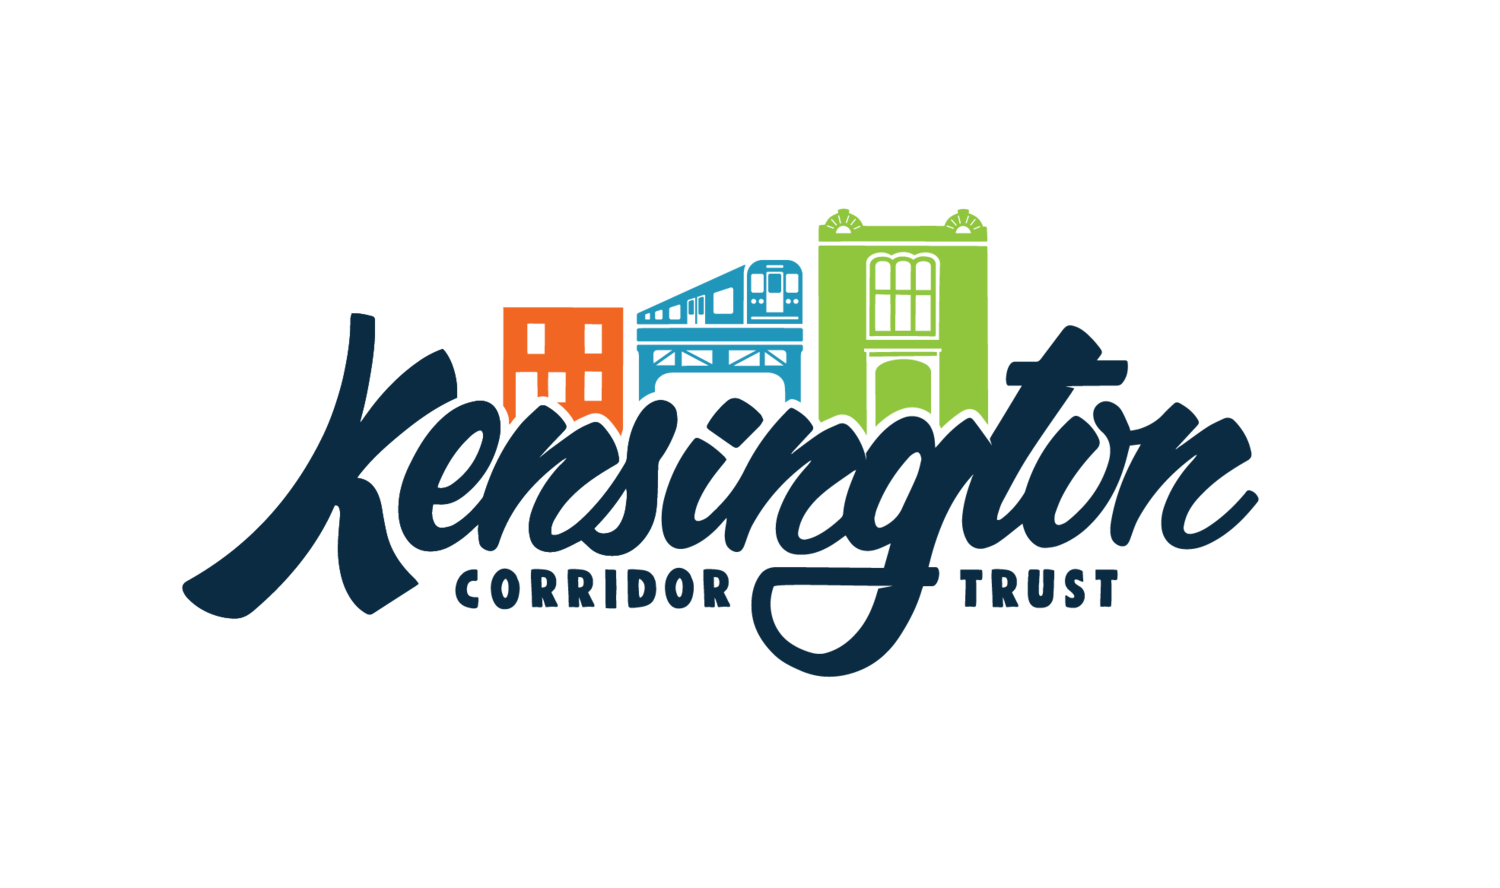 Kensington Corridor Trust